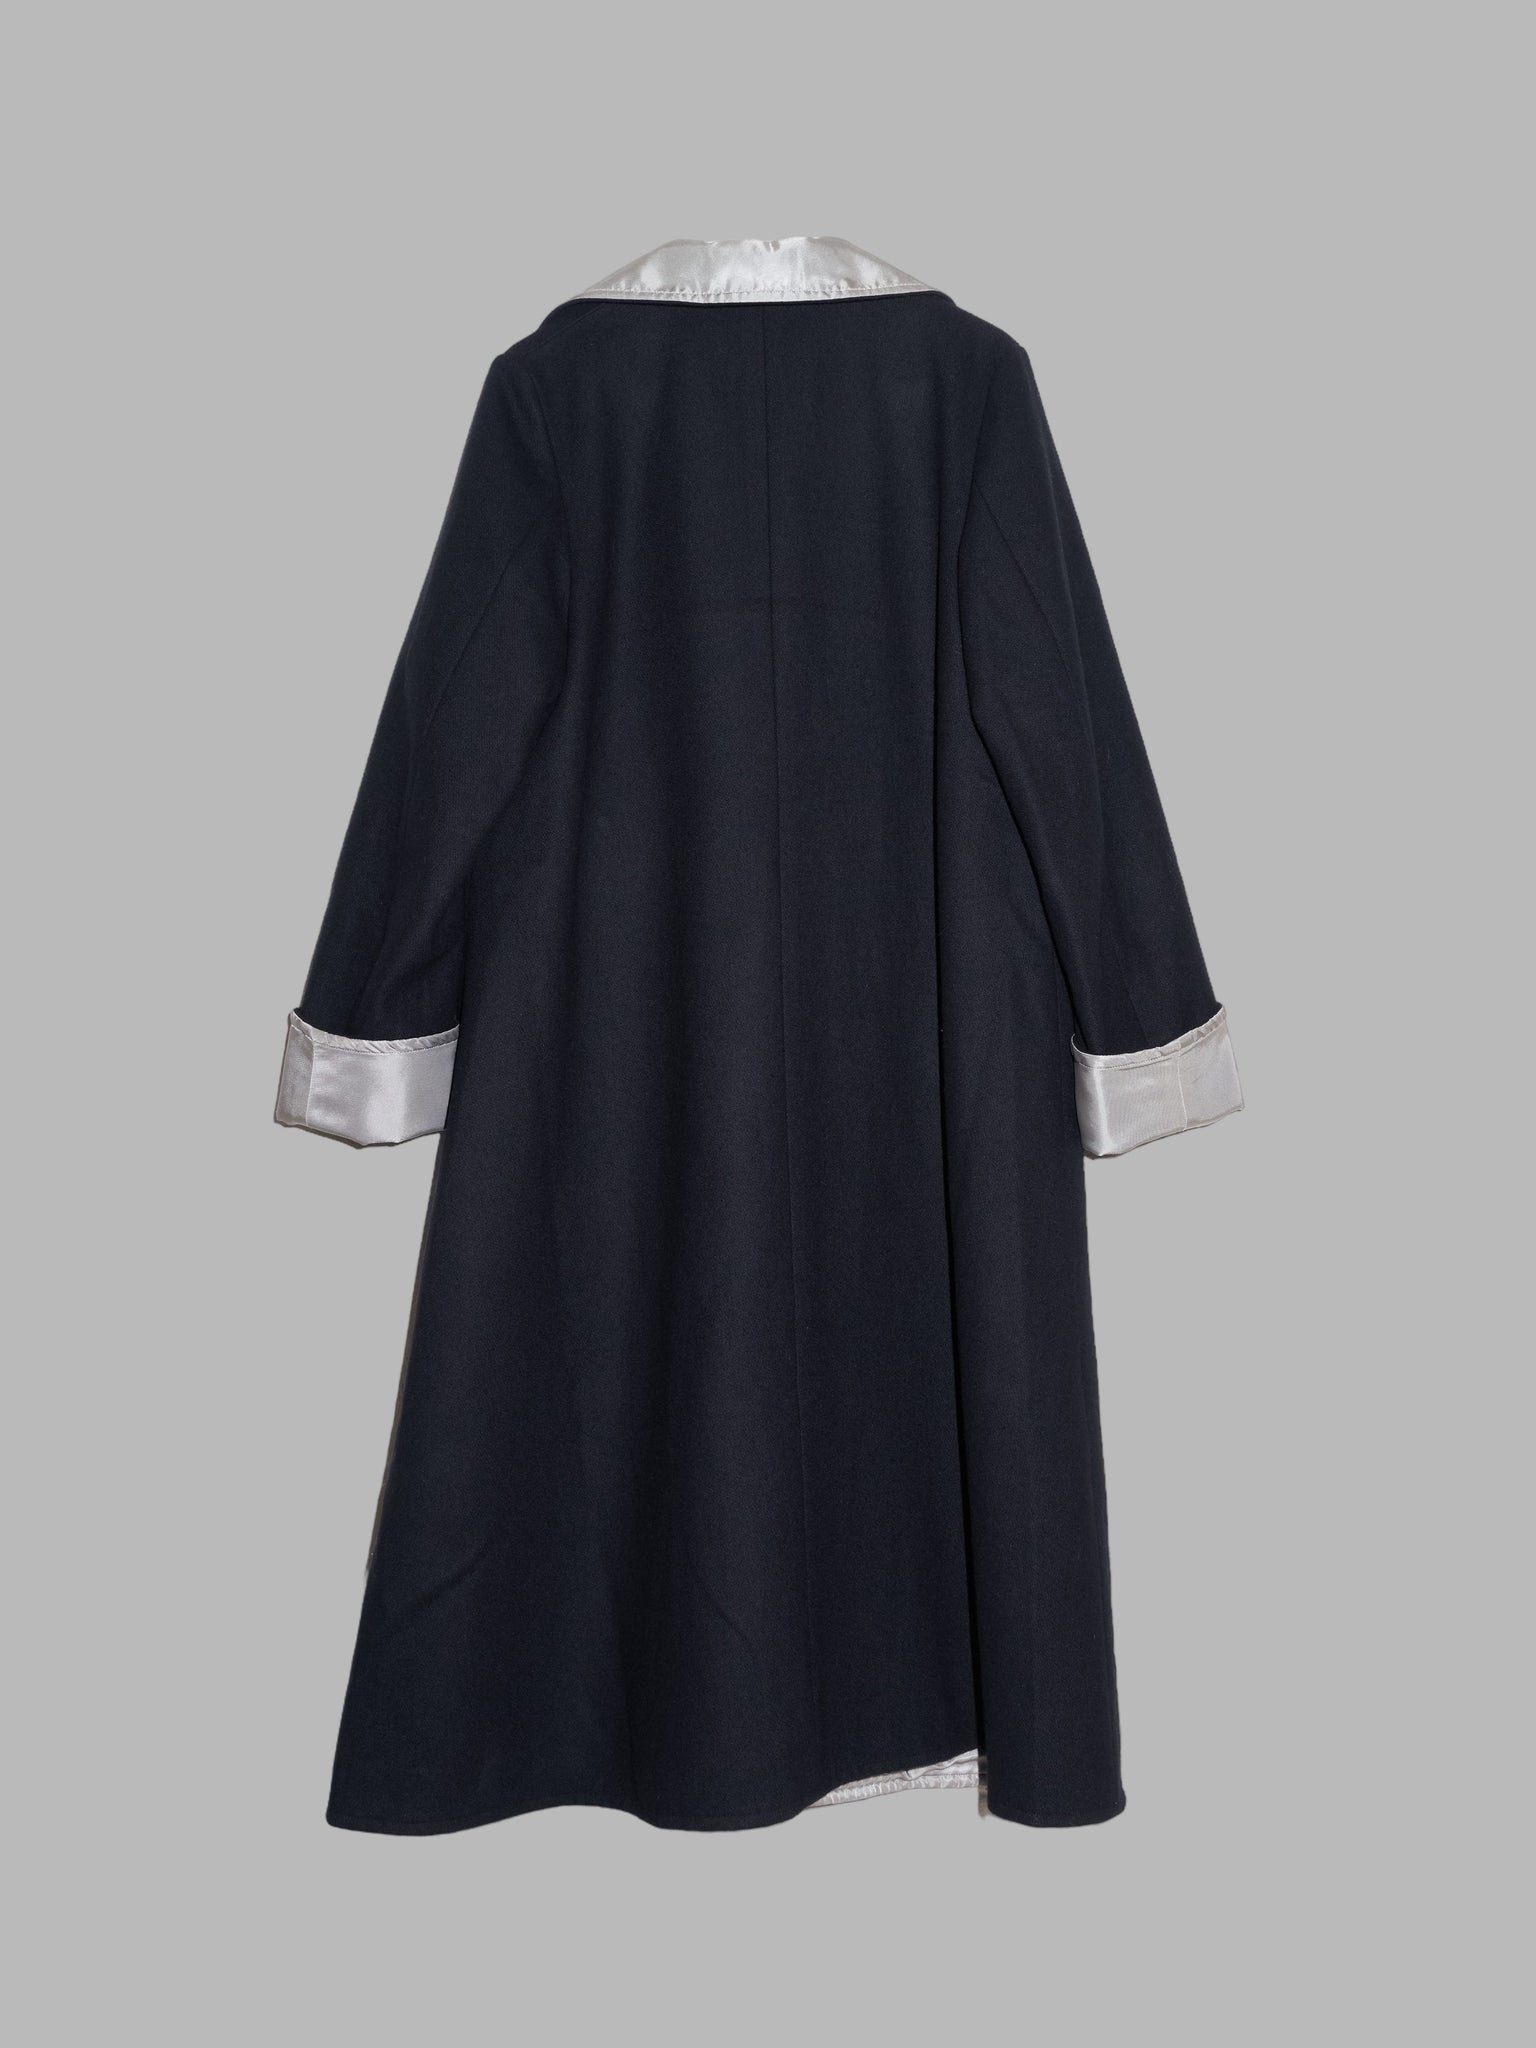 I Wish Y’s Bis Yohji Yamamoto 1990s reversible black silver melton wool coat